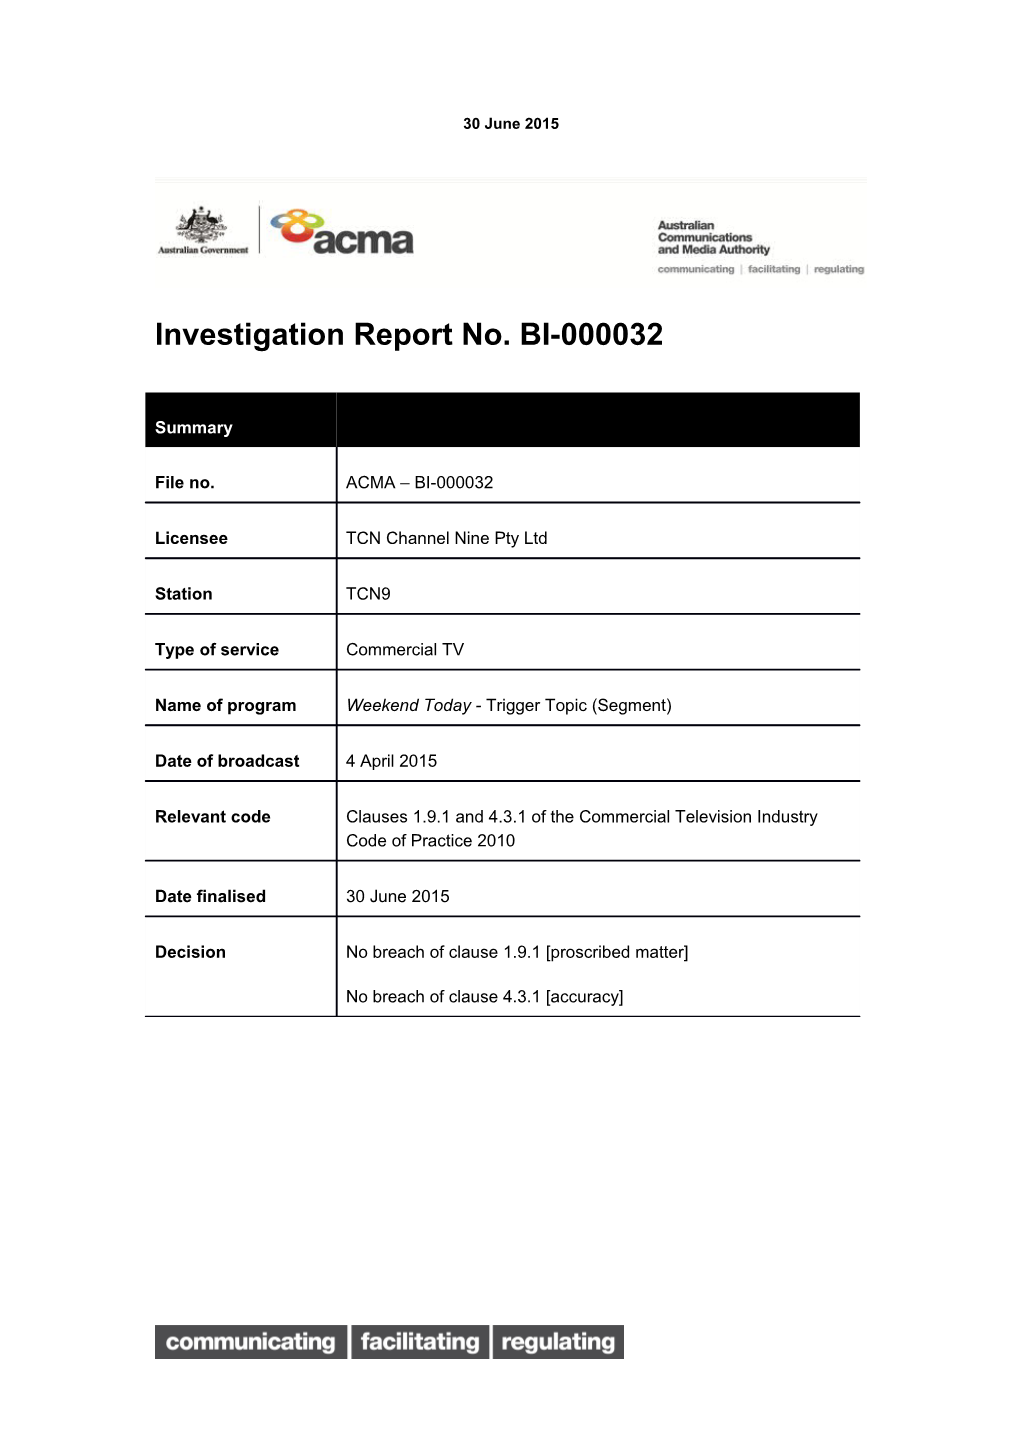 Investigation Report No. BI-000032